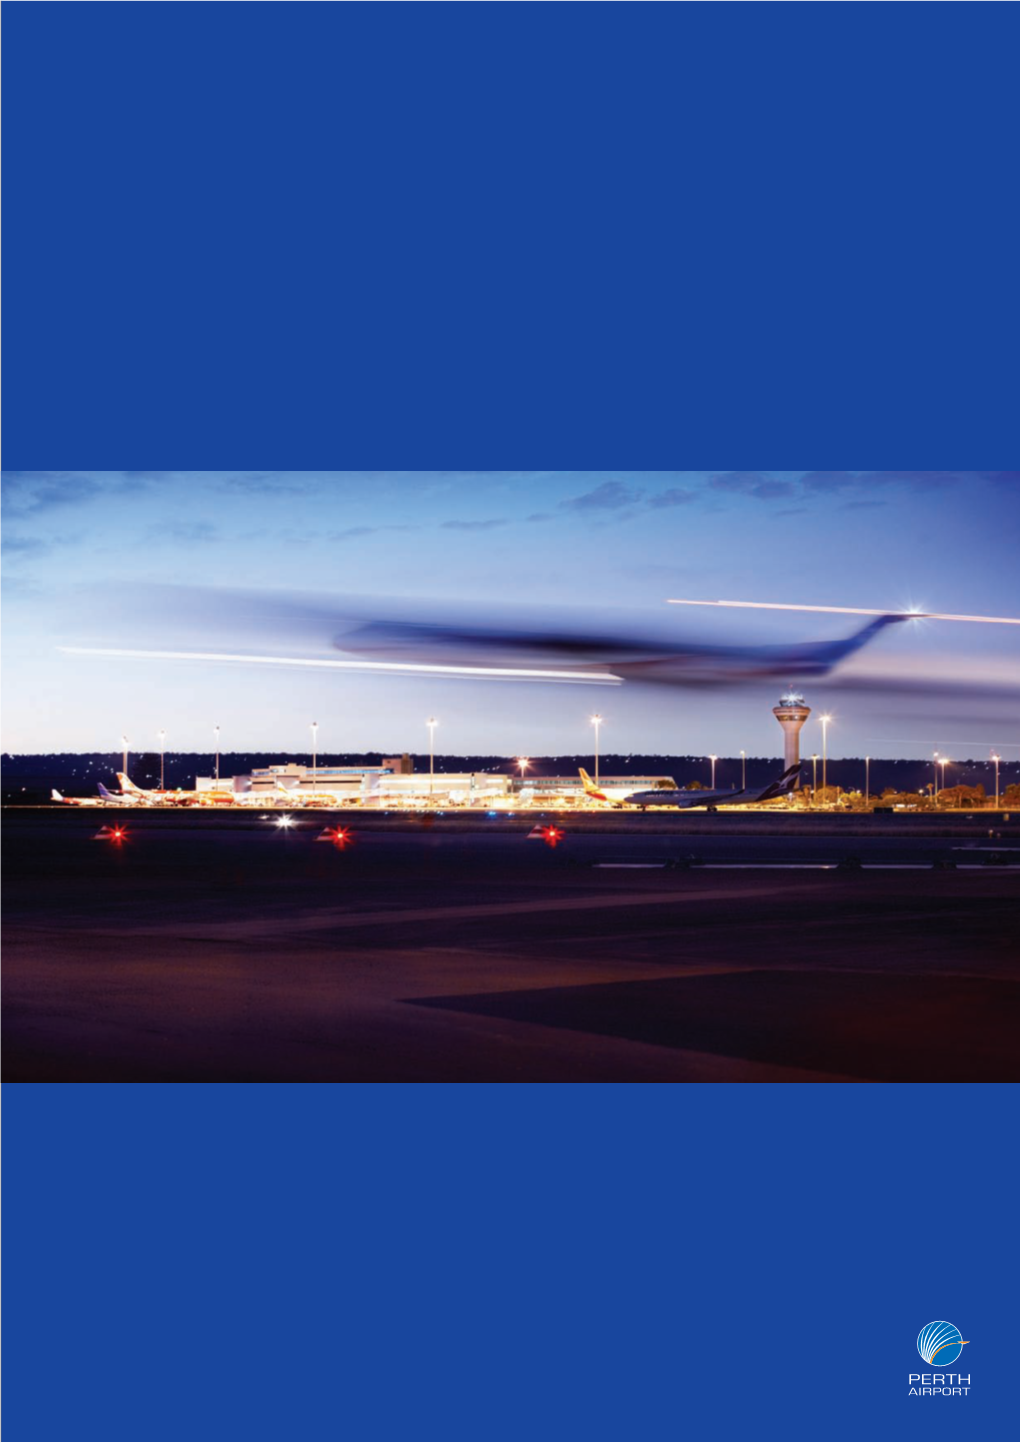 Perth Airport Annual Report 2010/11 (2.53MB)